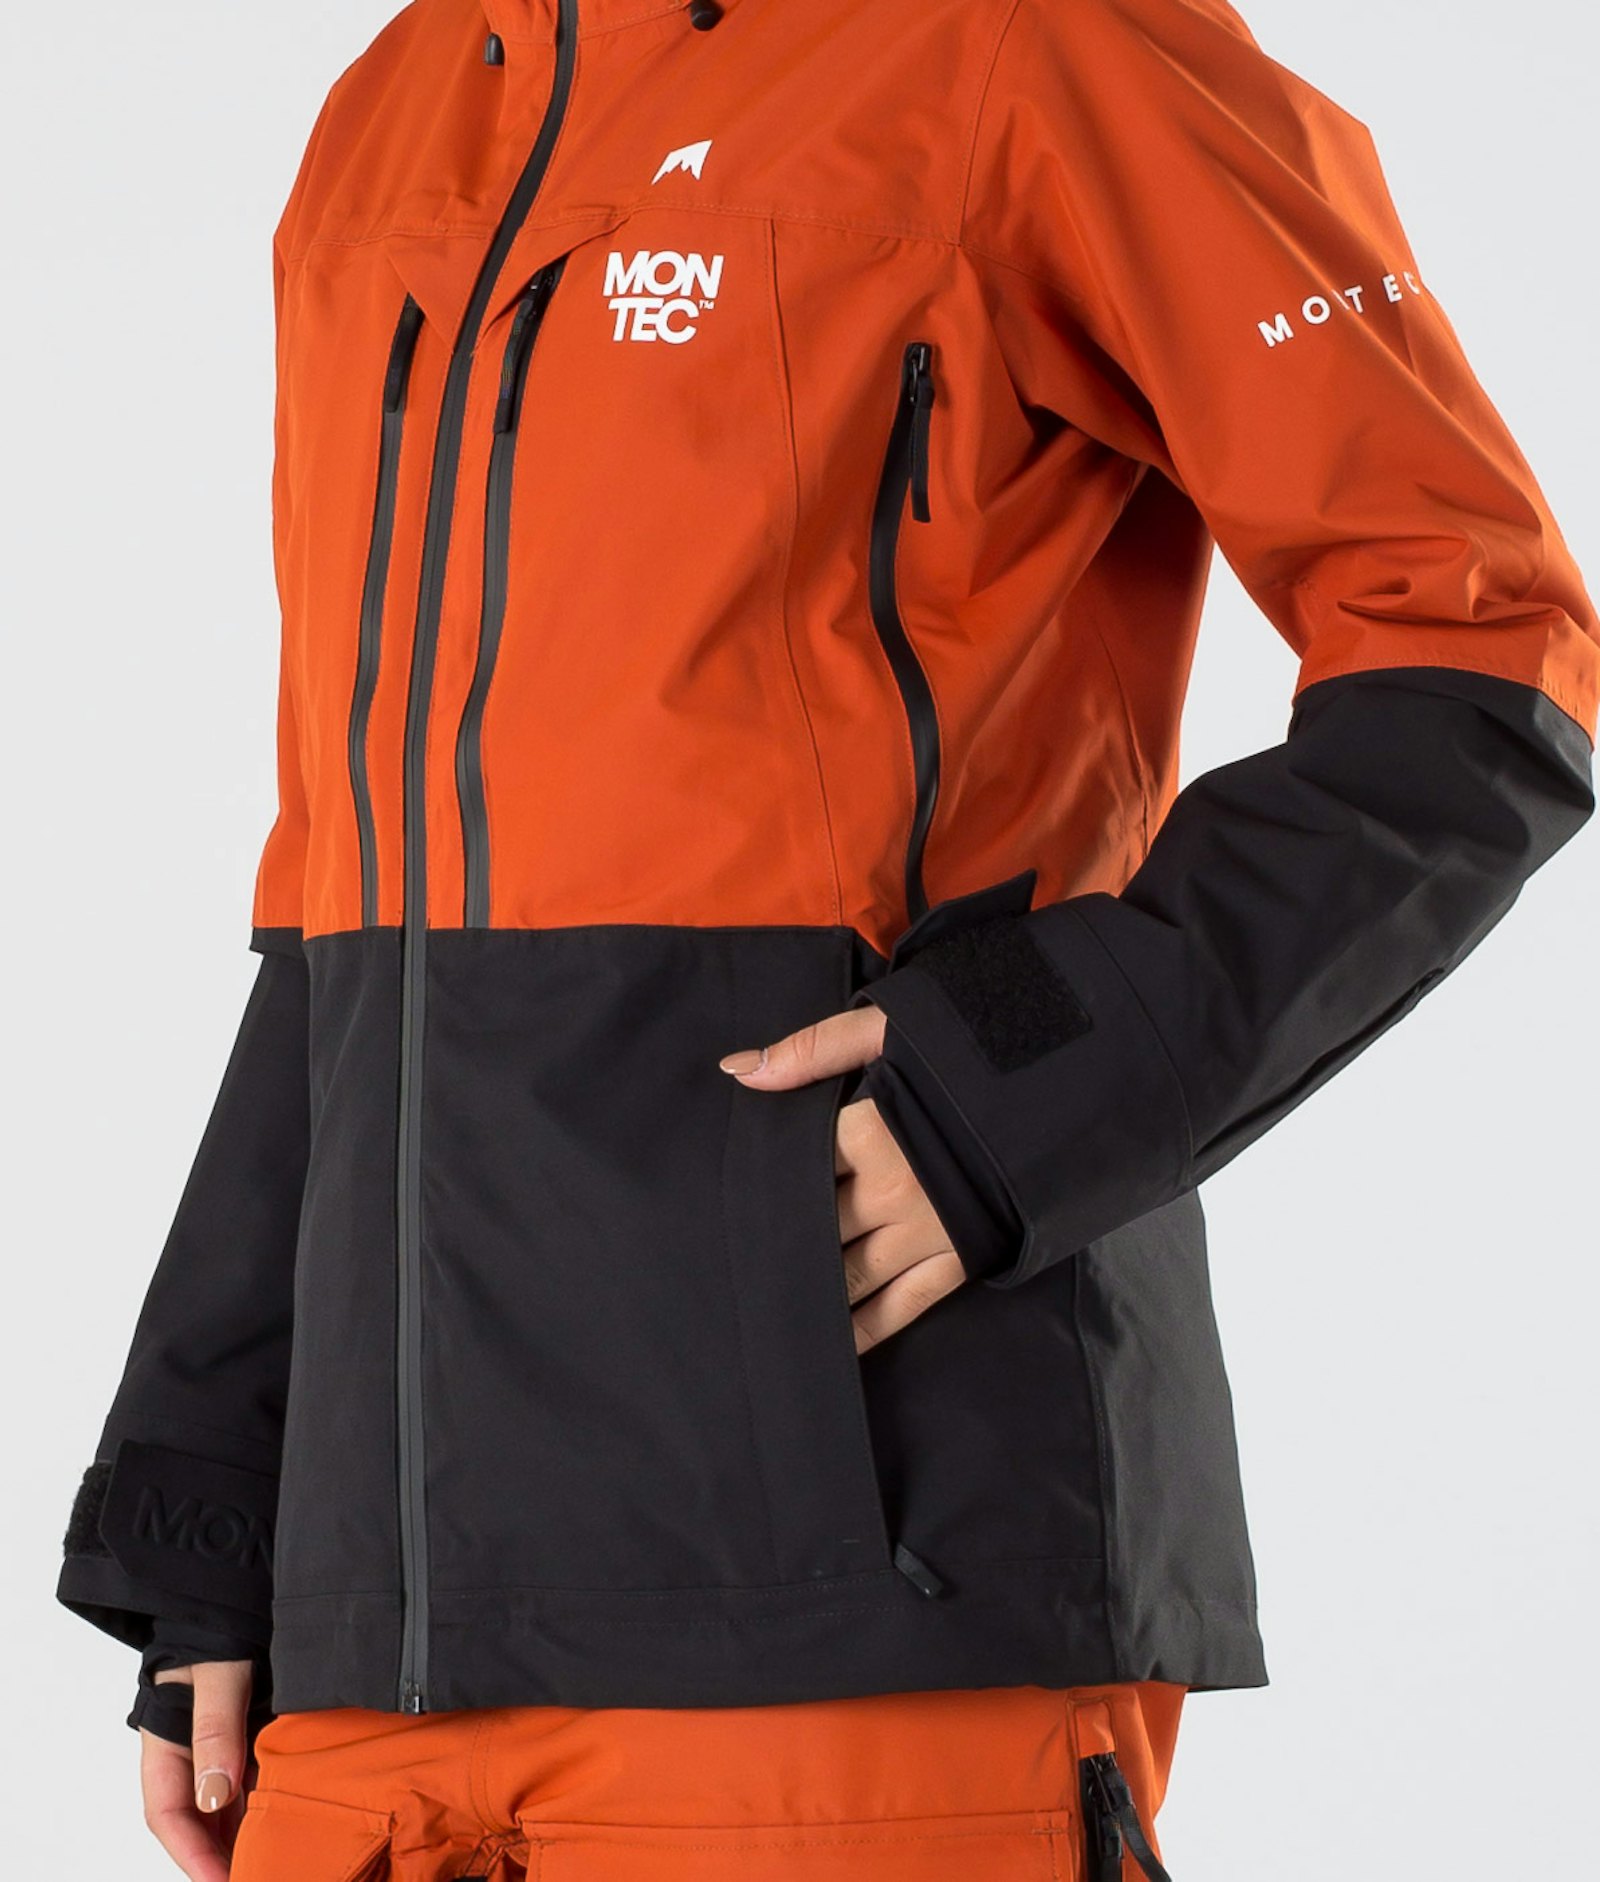 Moss W 2019 Snowboard Jacket Women Clay/Black/White